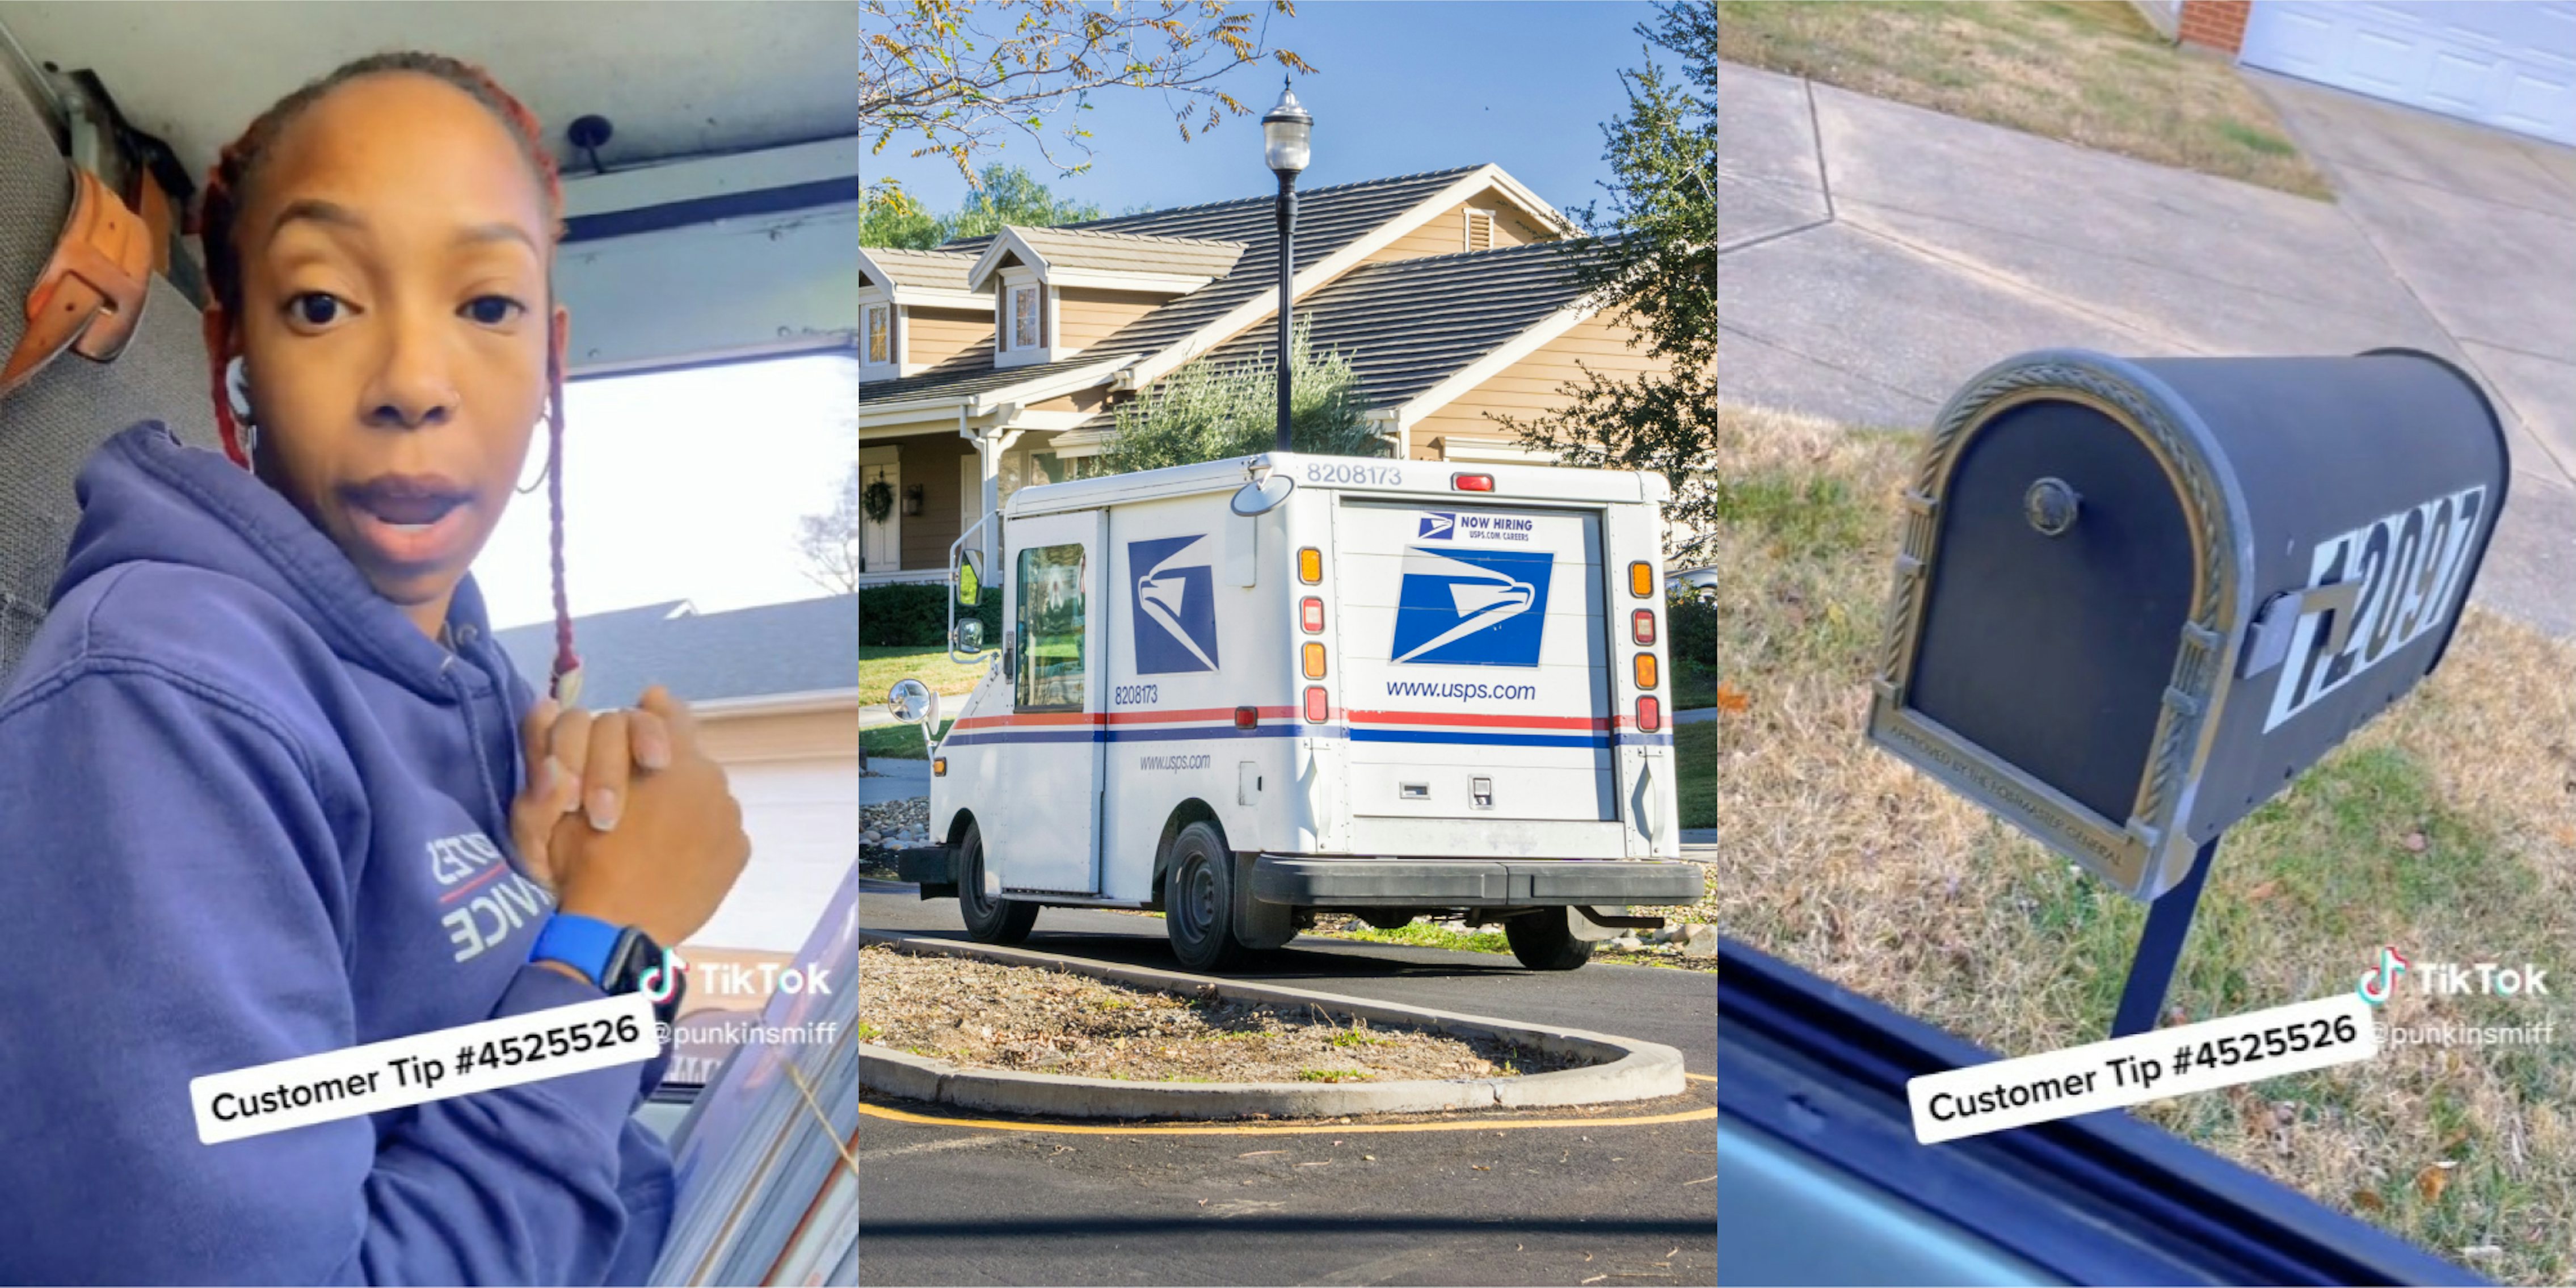 usps mailwoman gives a mailbox PSA tiktok